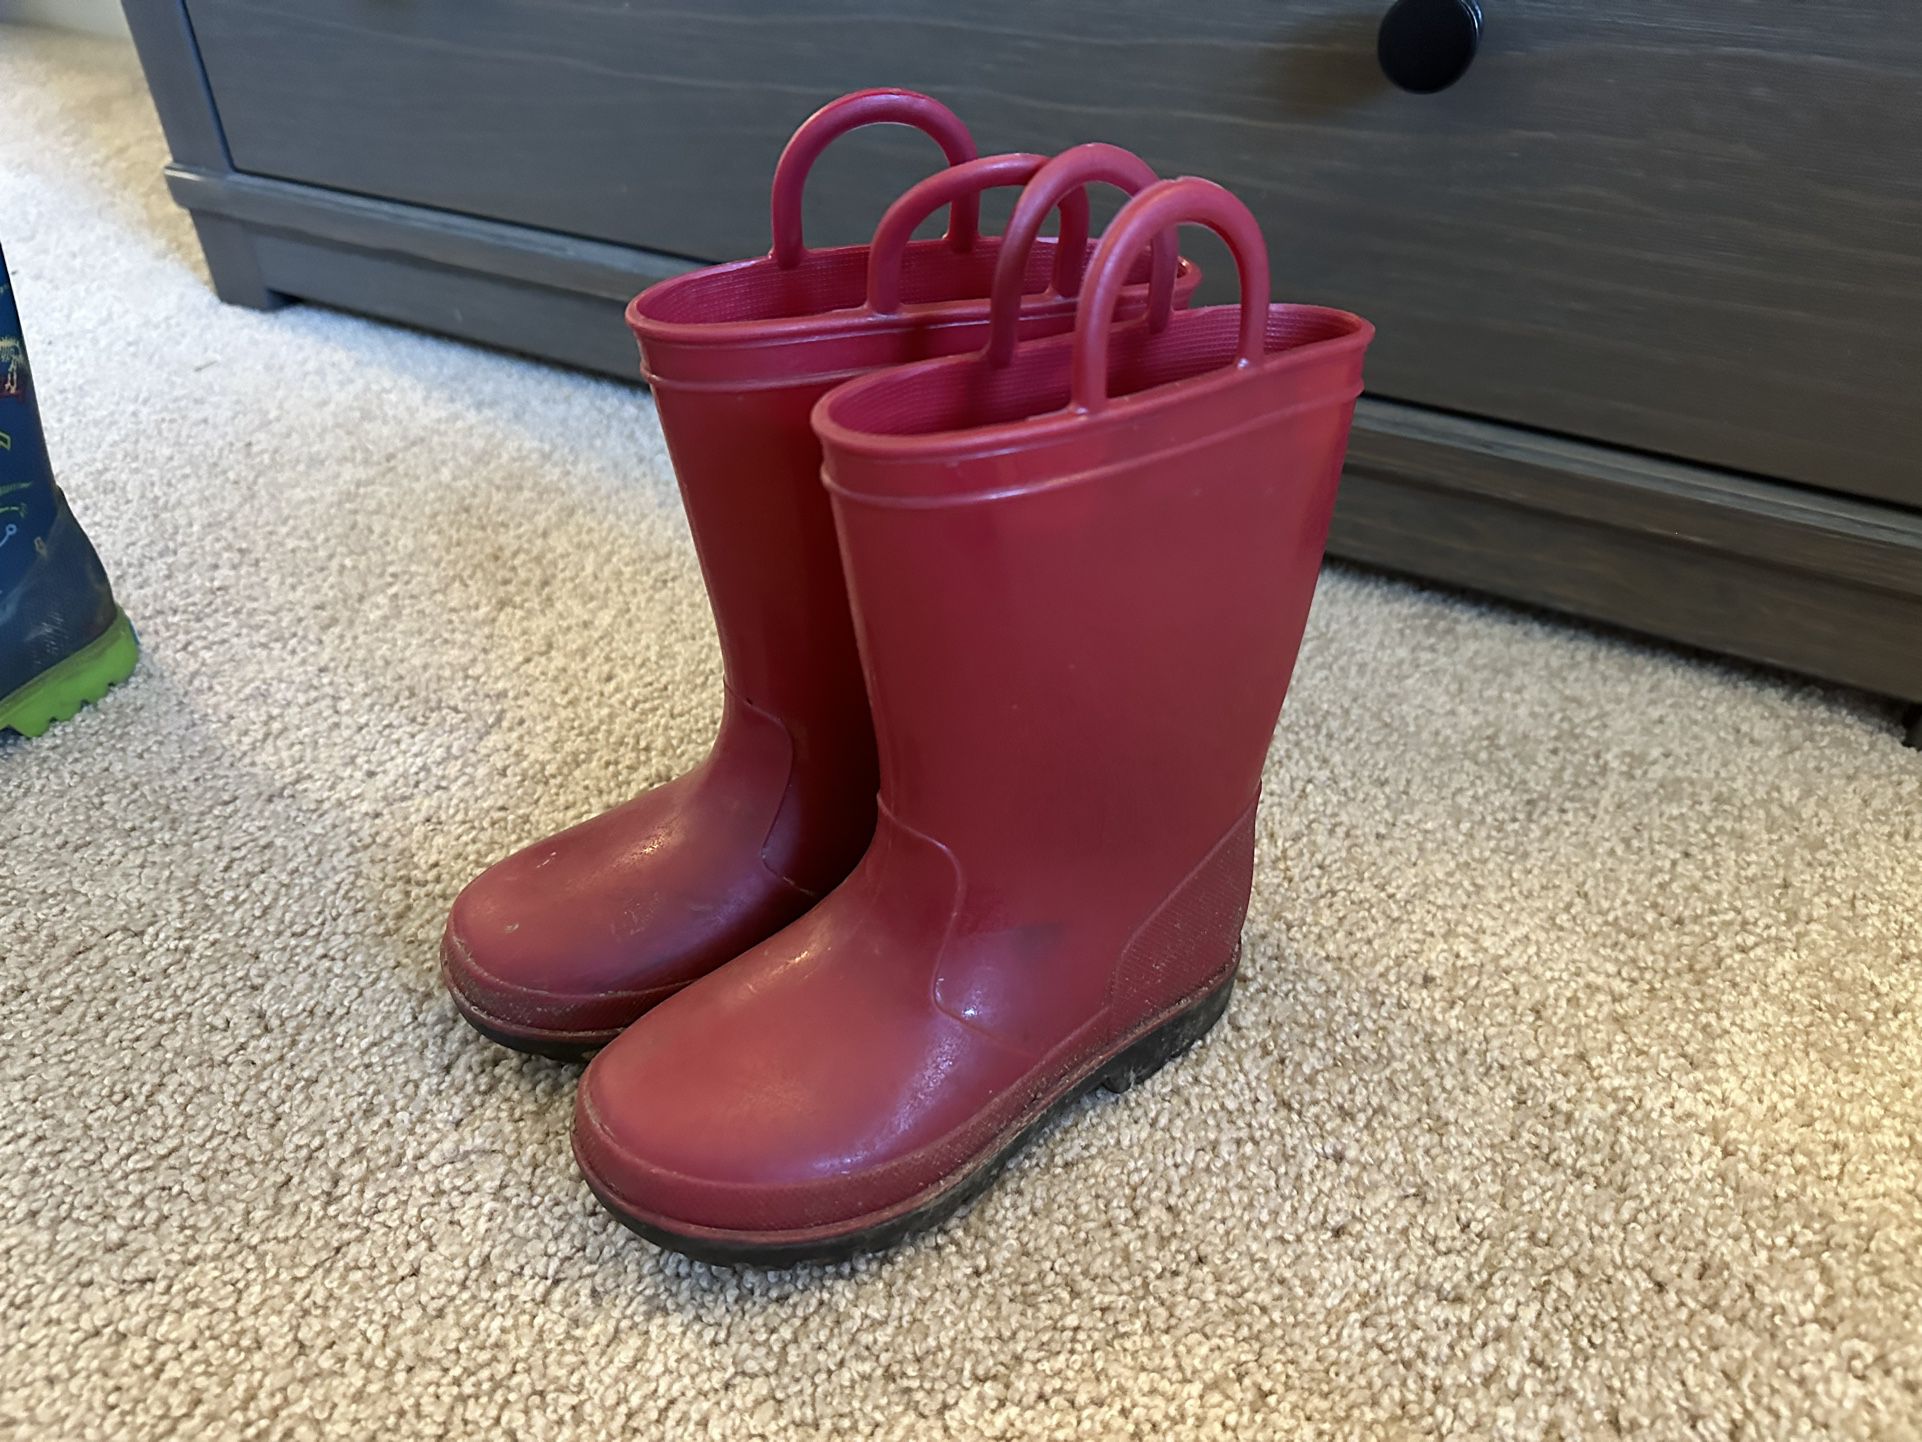 Boys Size 10 Rain Boots 